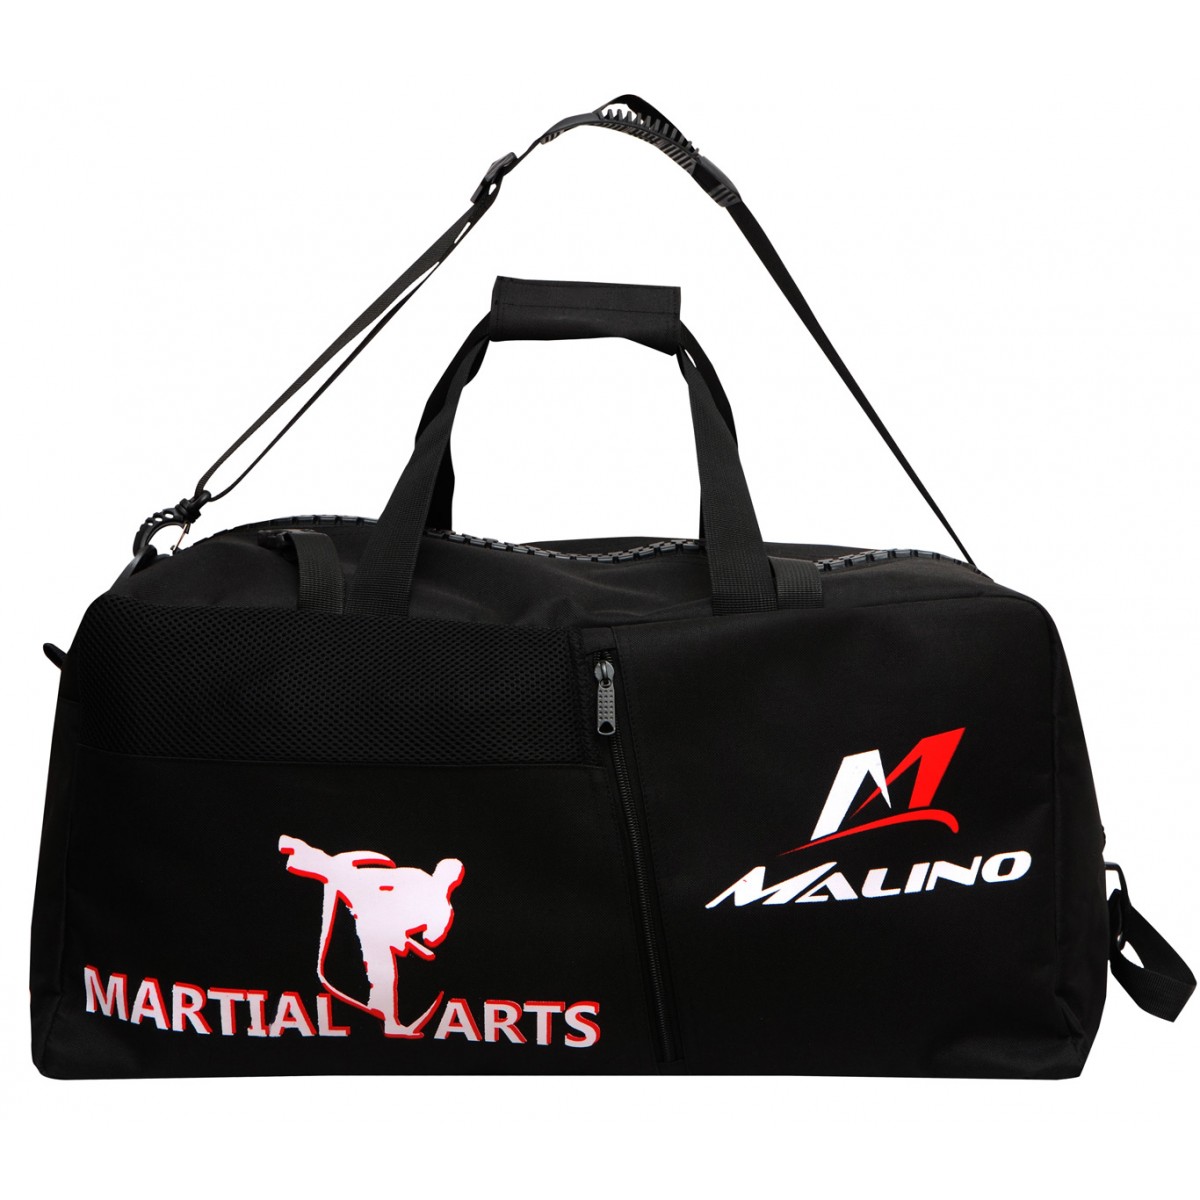 Malino Large Equipment Martial Arts Sports Bag Karate Gym Boxing Training Bag 